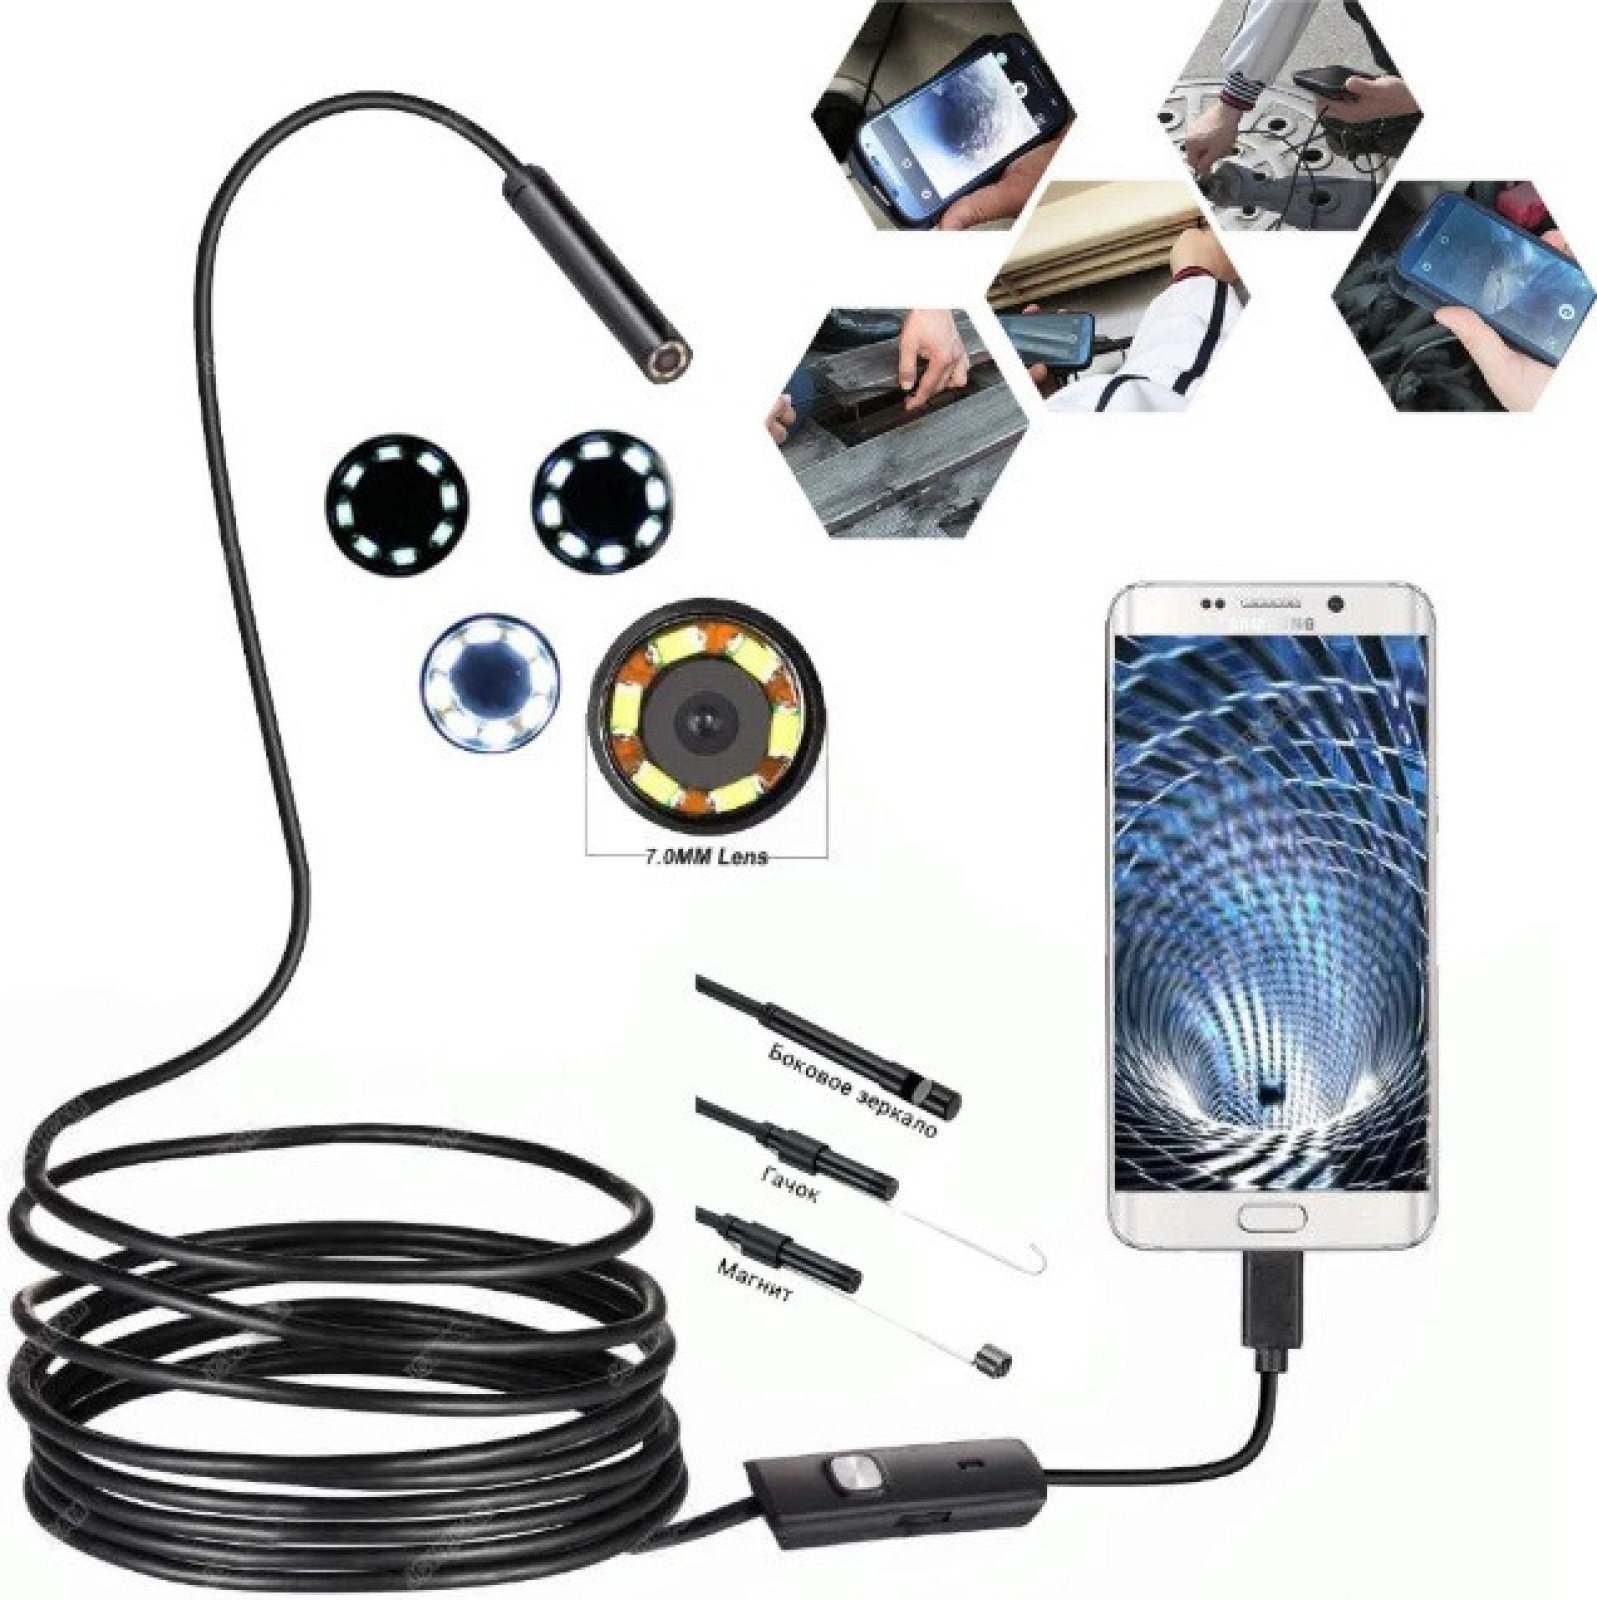 Камера Эндоскоп Android and PC Endoscope гибкая USB камера 5 метра эндоскопическая камера для смартфона, планшета, ноутбука 207271